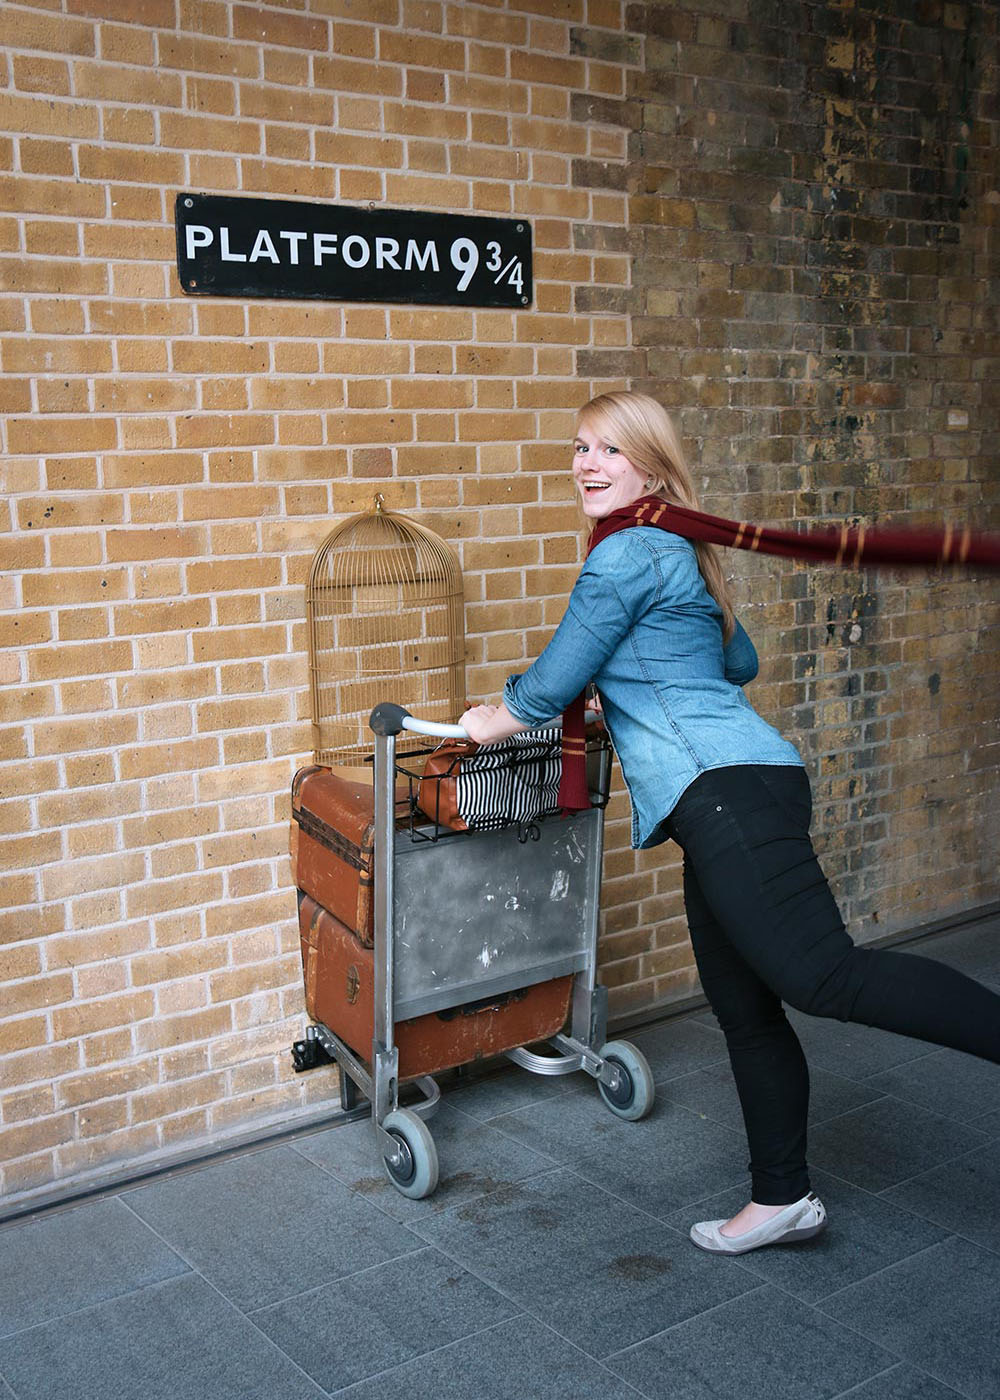 Plateforme 9 3/4, Harry Potter, Londres, Angleterre / Platform 9 3/4, Harry Potter, London, England, UK.